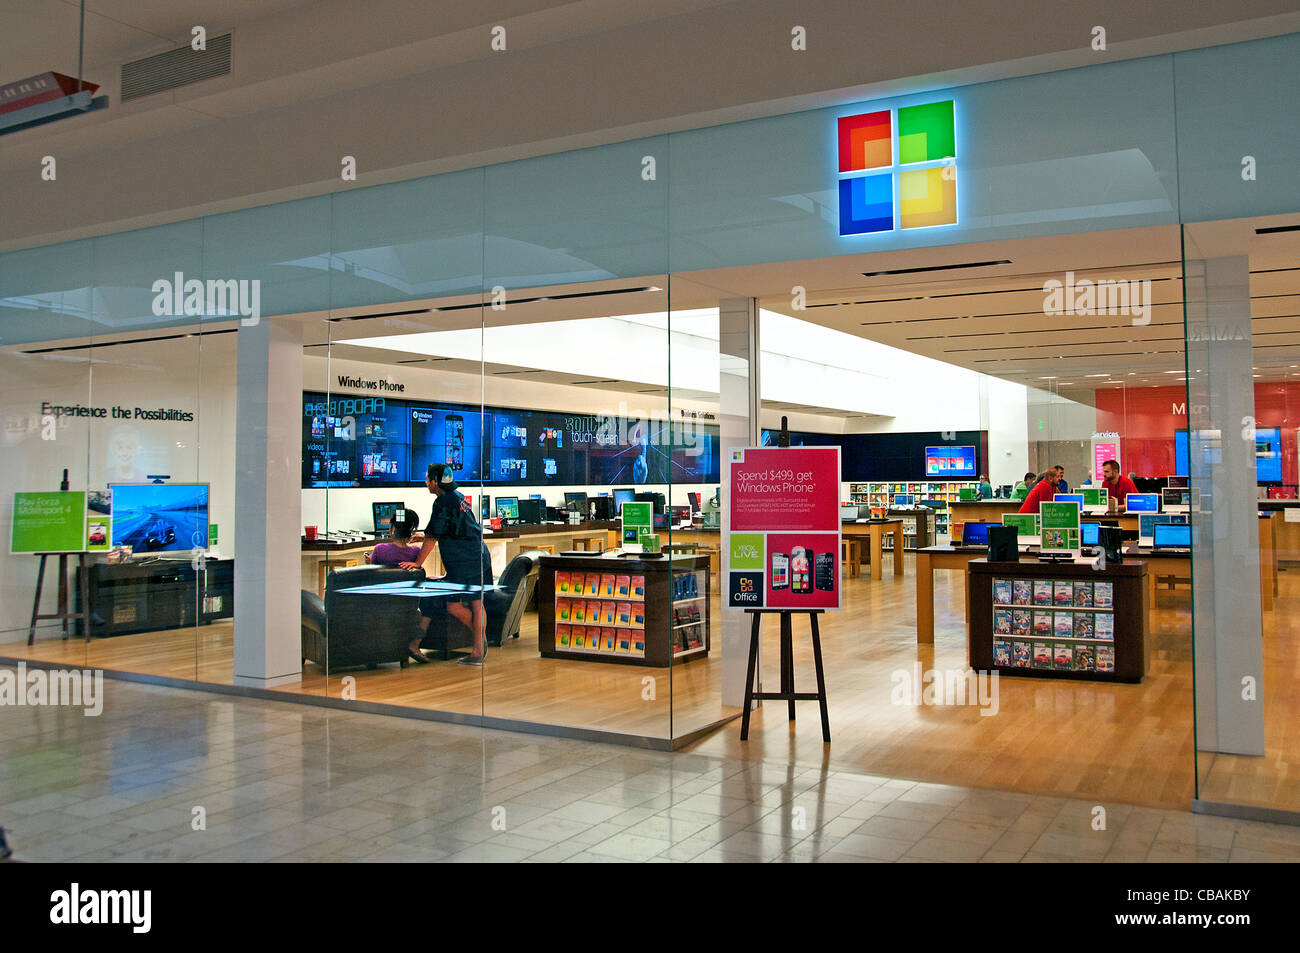 Windows Phone Microsoft shopping mall shop store computer Phone United States Stock Photo